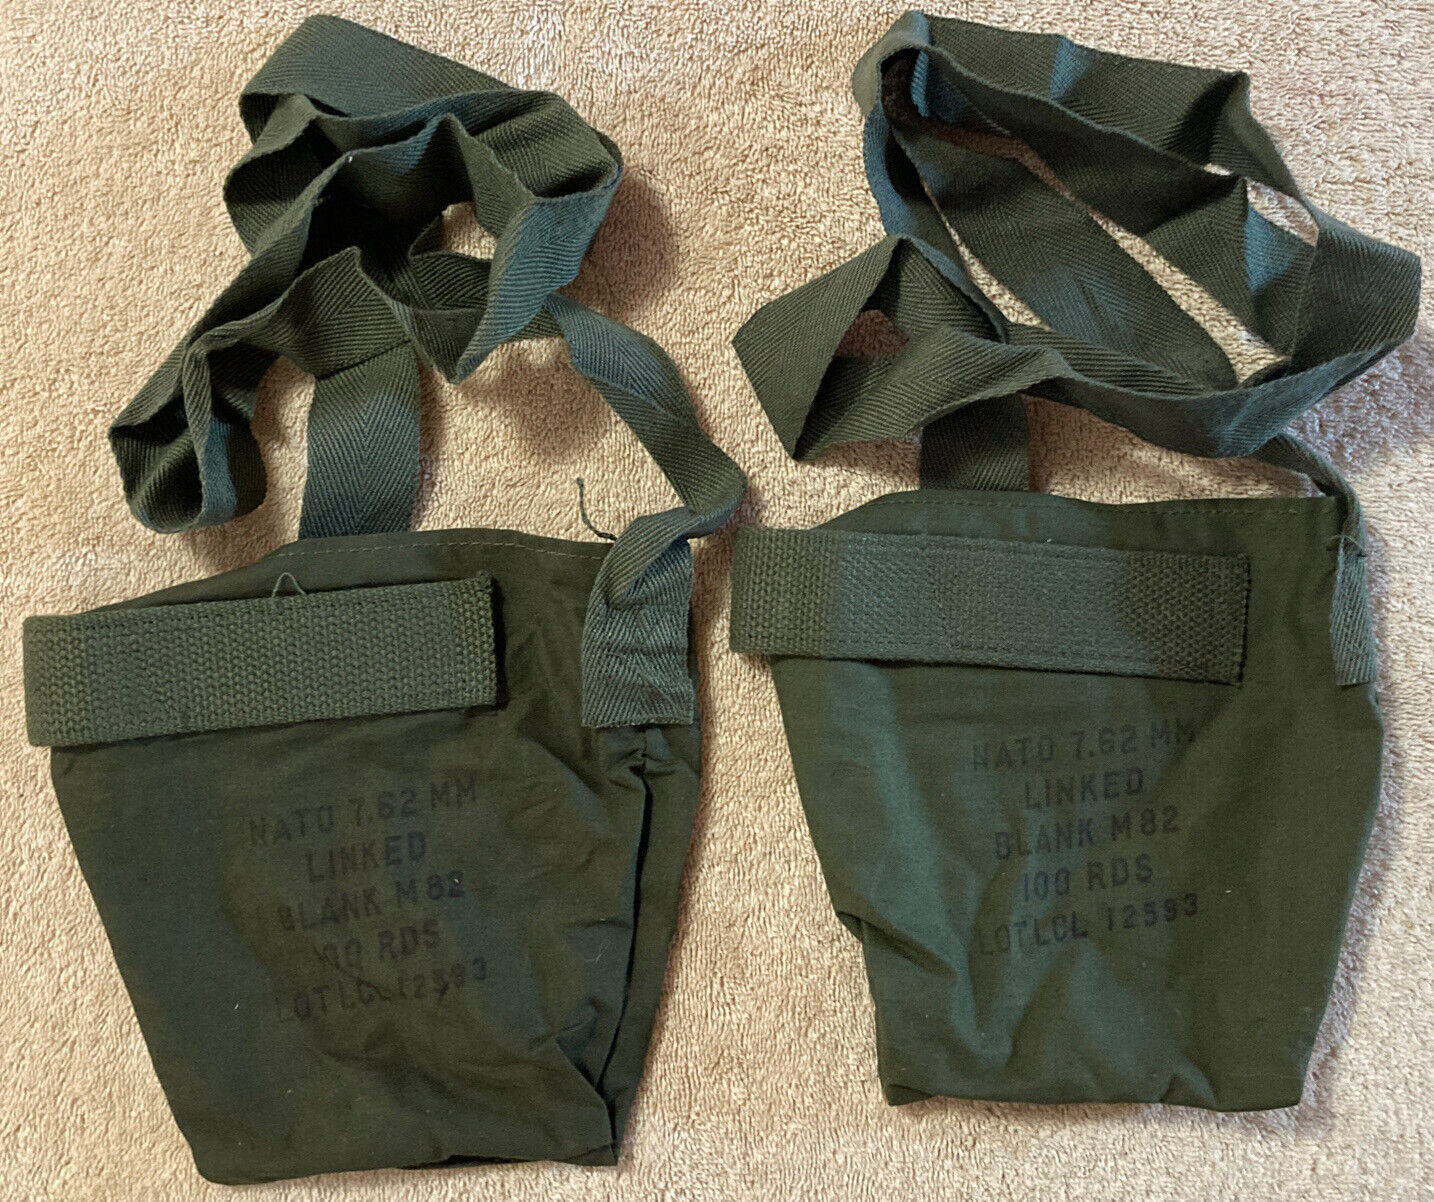 Vintage 1966 Military Shoulder Bag Green Small Army Bag 7.62 MM Linked Blank M82